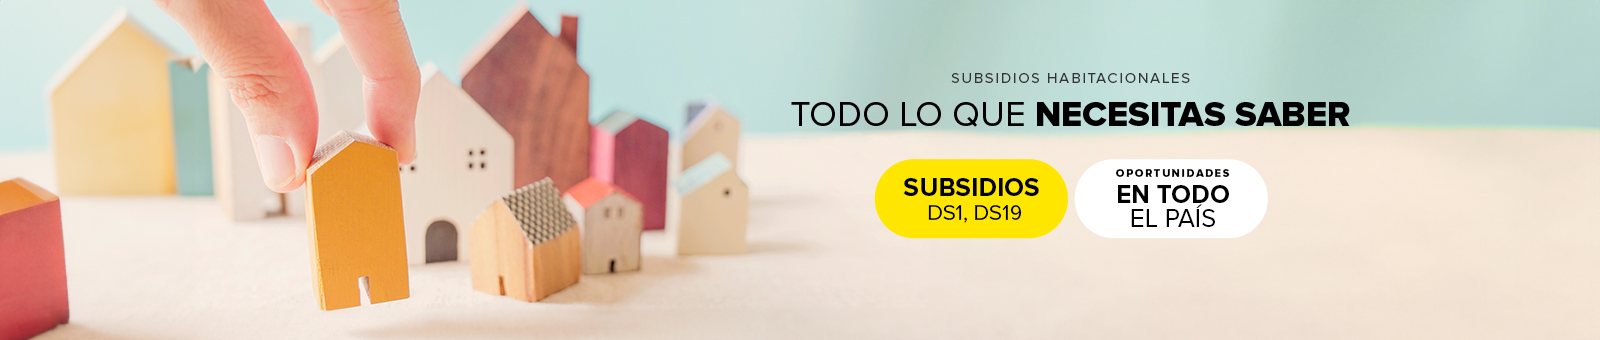 Subsidios_Desktop